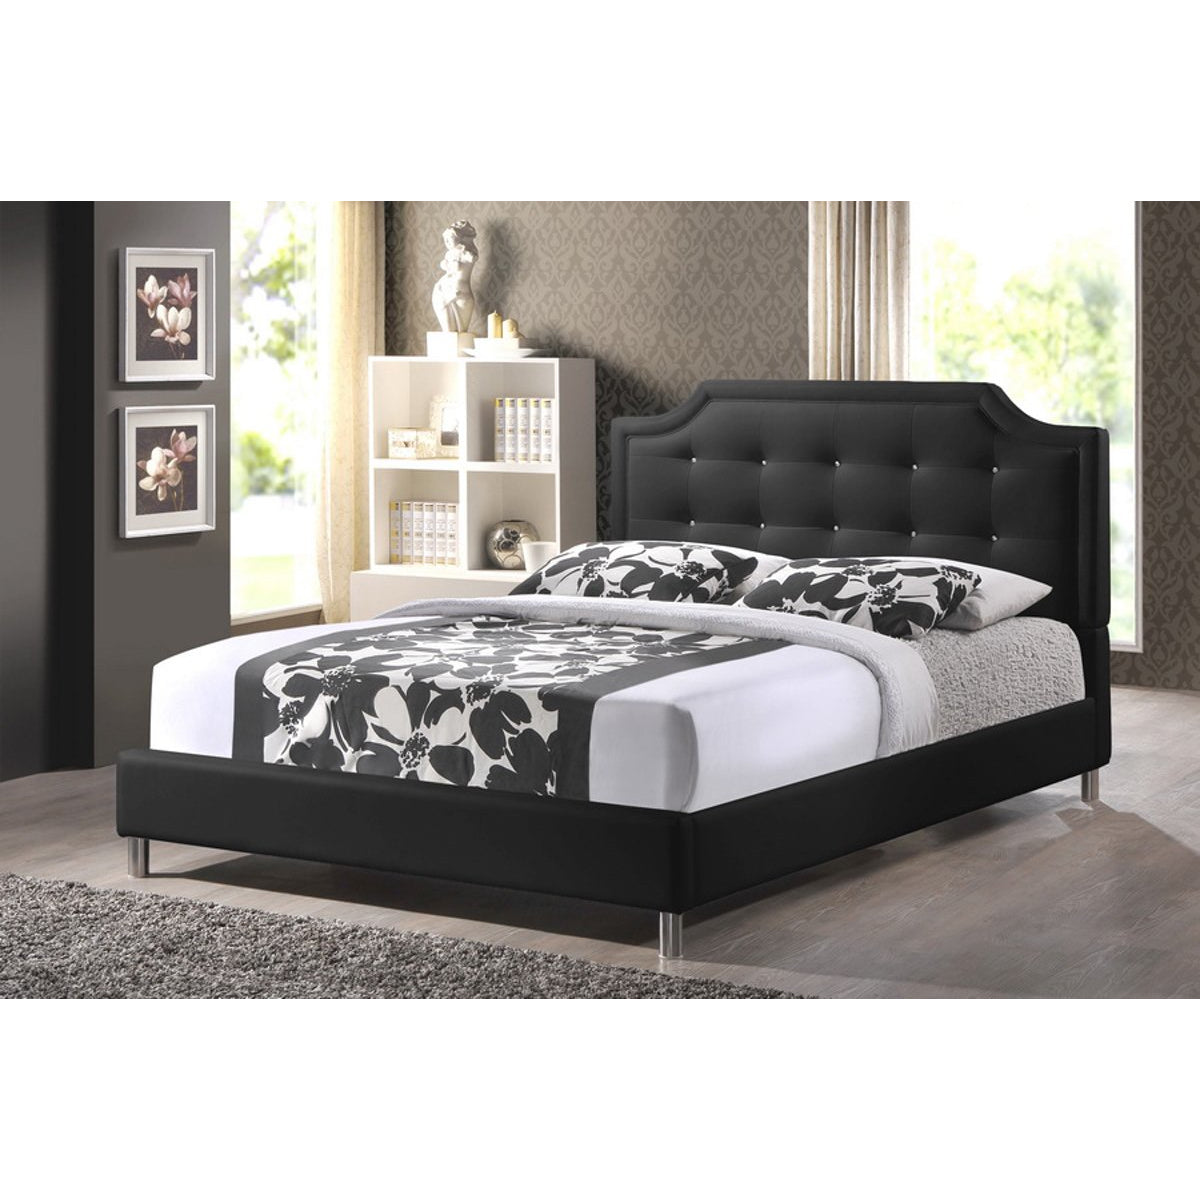 Baxton Studio Carlotta Black Modern Bed with Upholstered Headboard - King Size Baxton Studio-beds-Minimal And Modern - 1